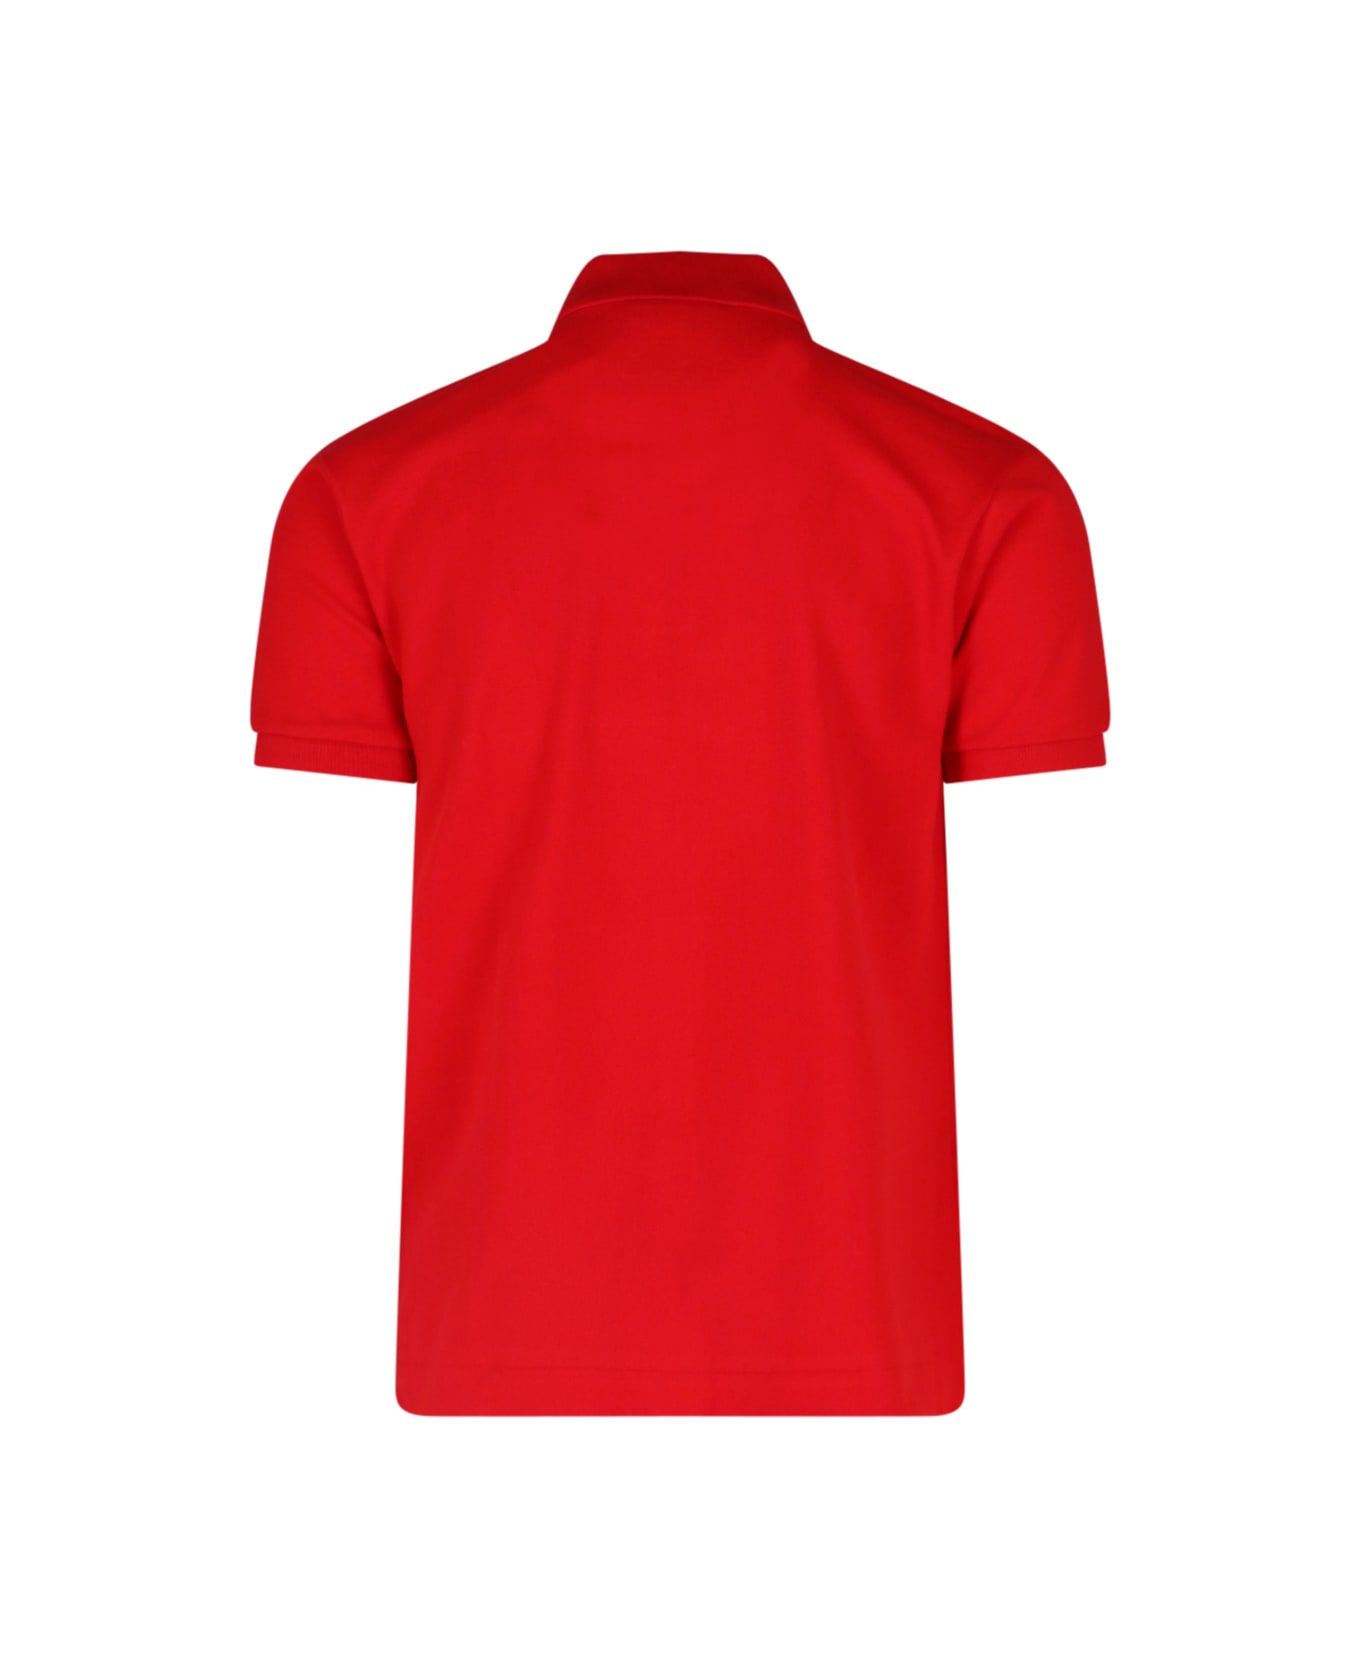 Lacoste Classic Design Polo Shirt - Rosso